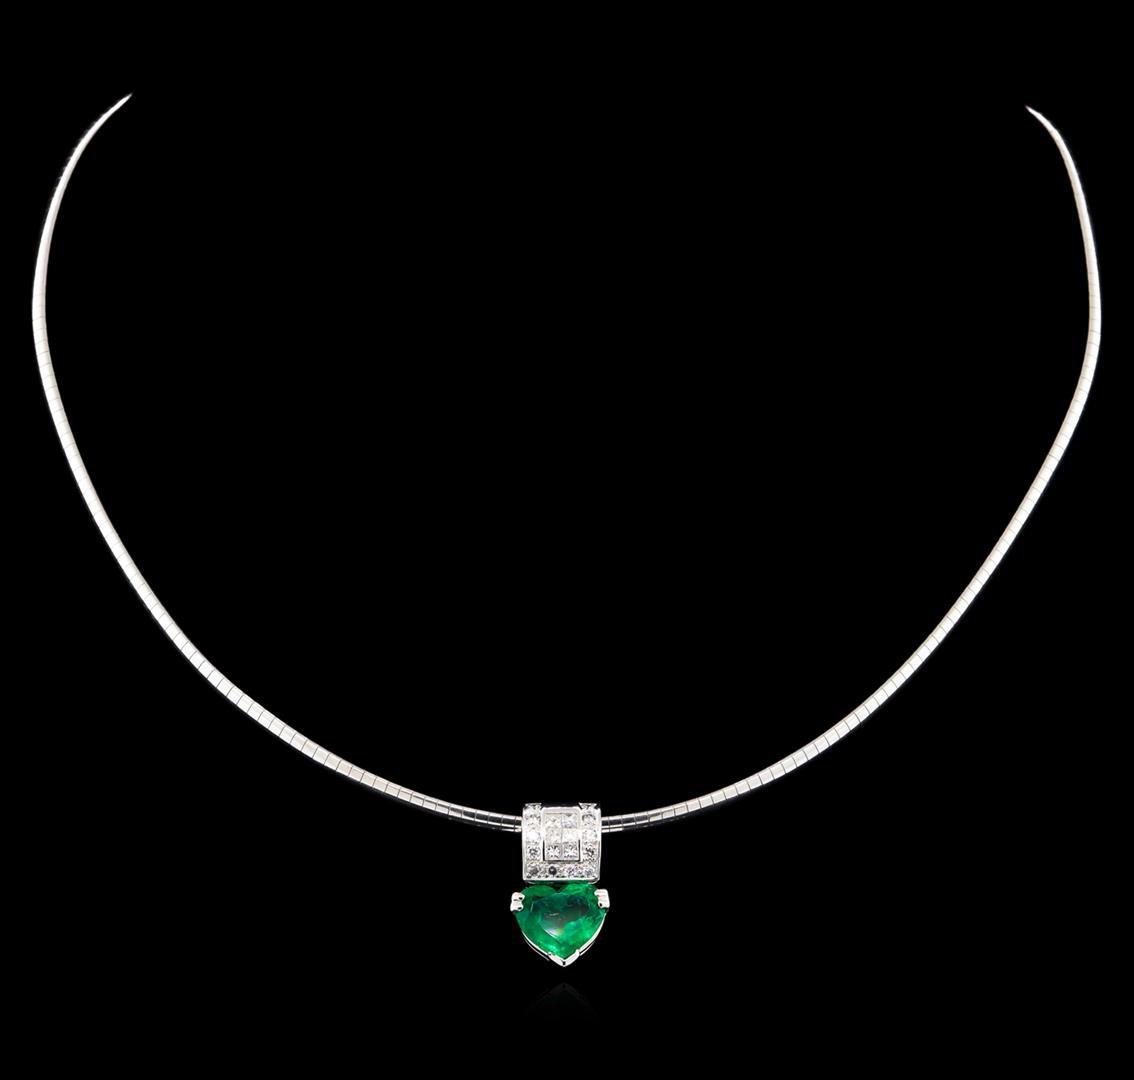 3.02 ctw Emerald and Diamond Pendant - 18KT White Gold